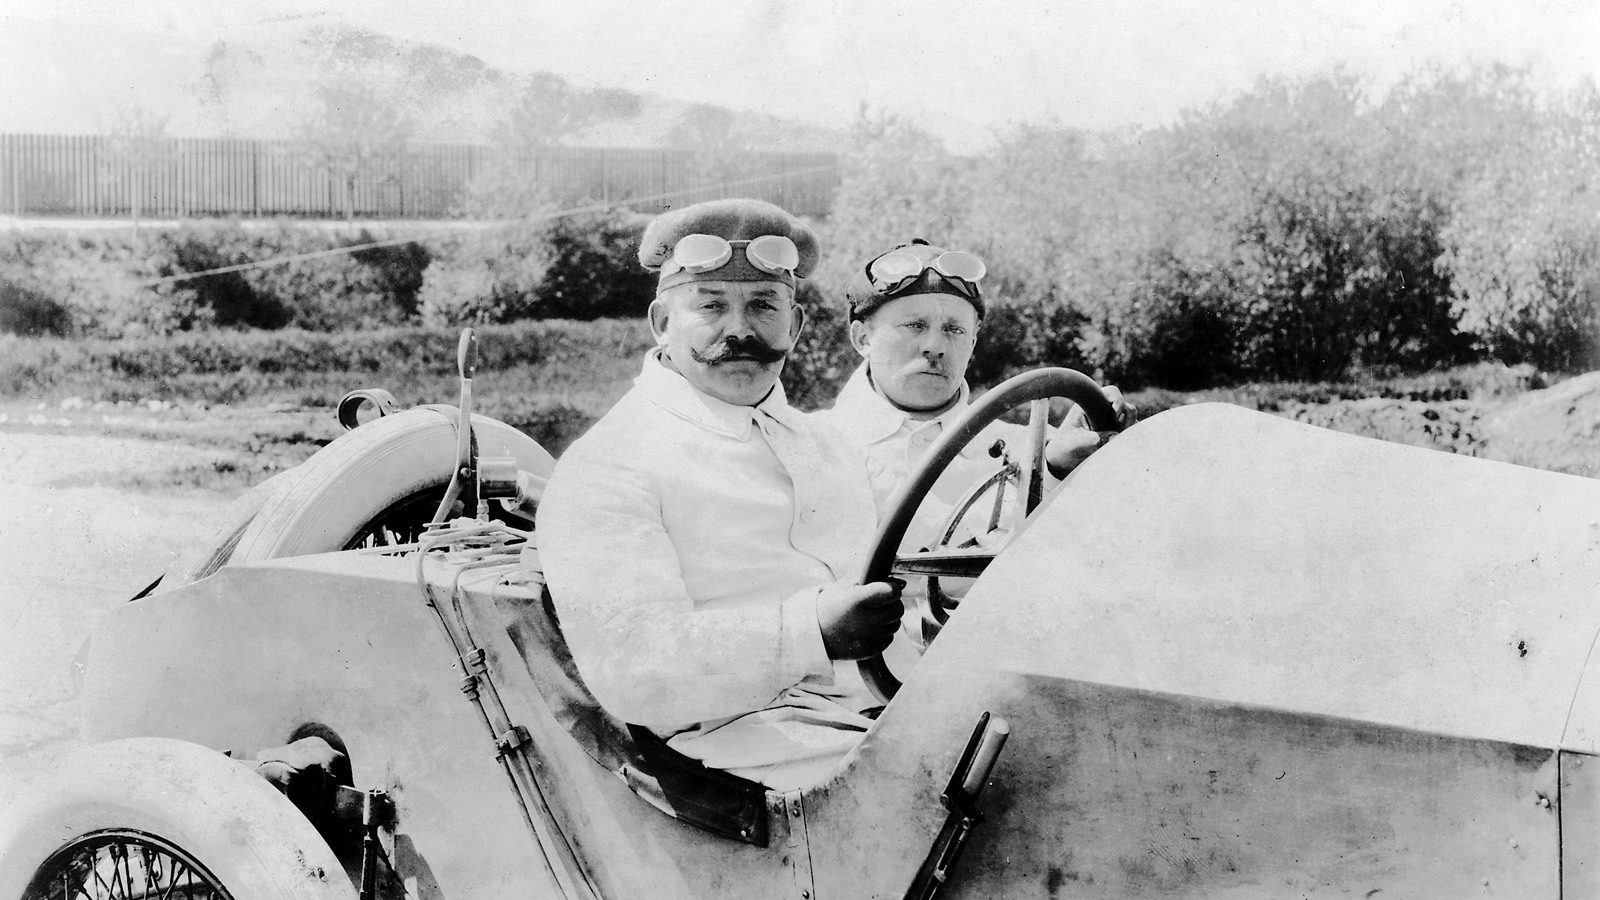 1914 Mercedes Grand Prix race car